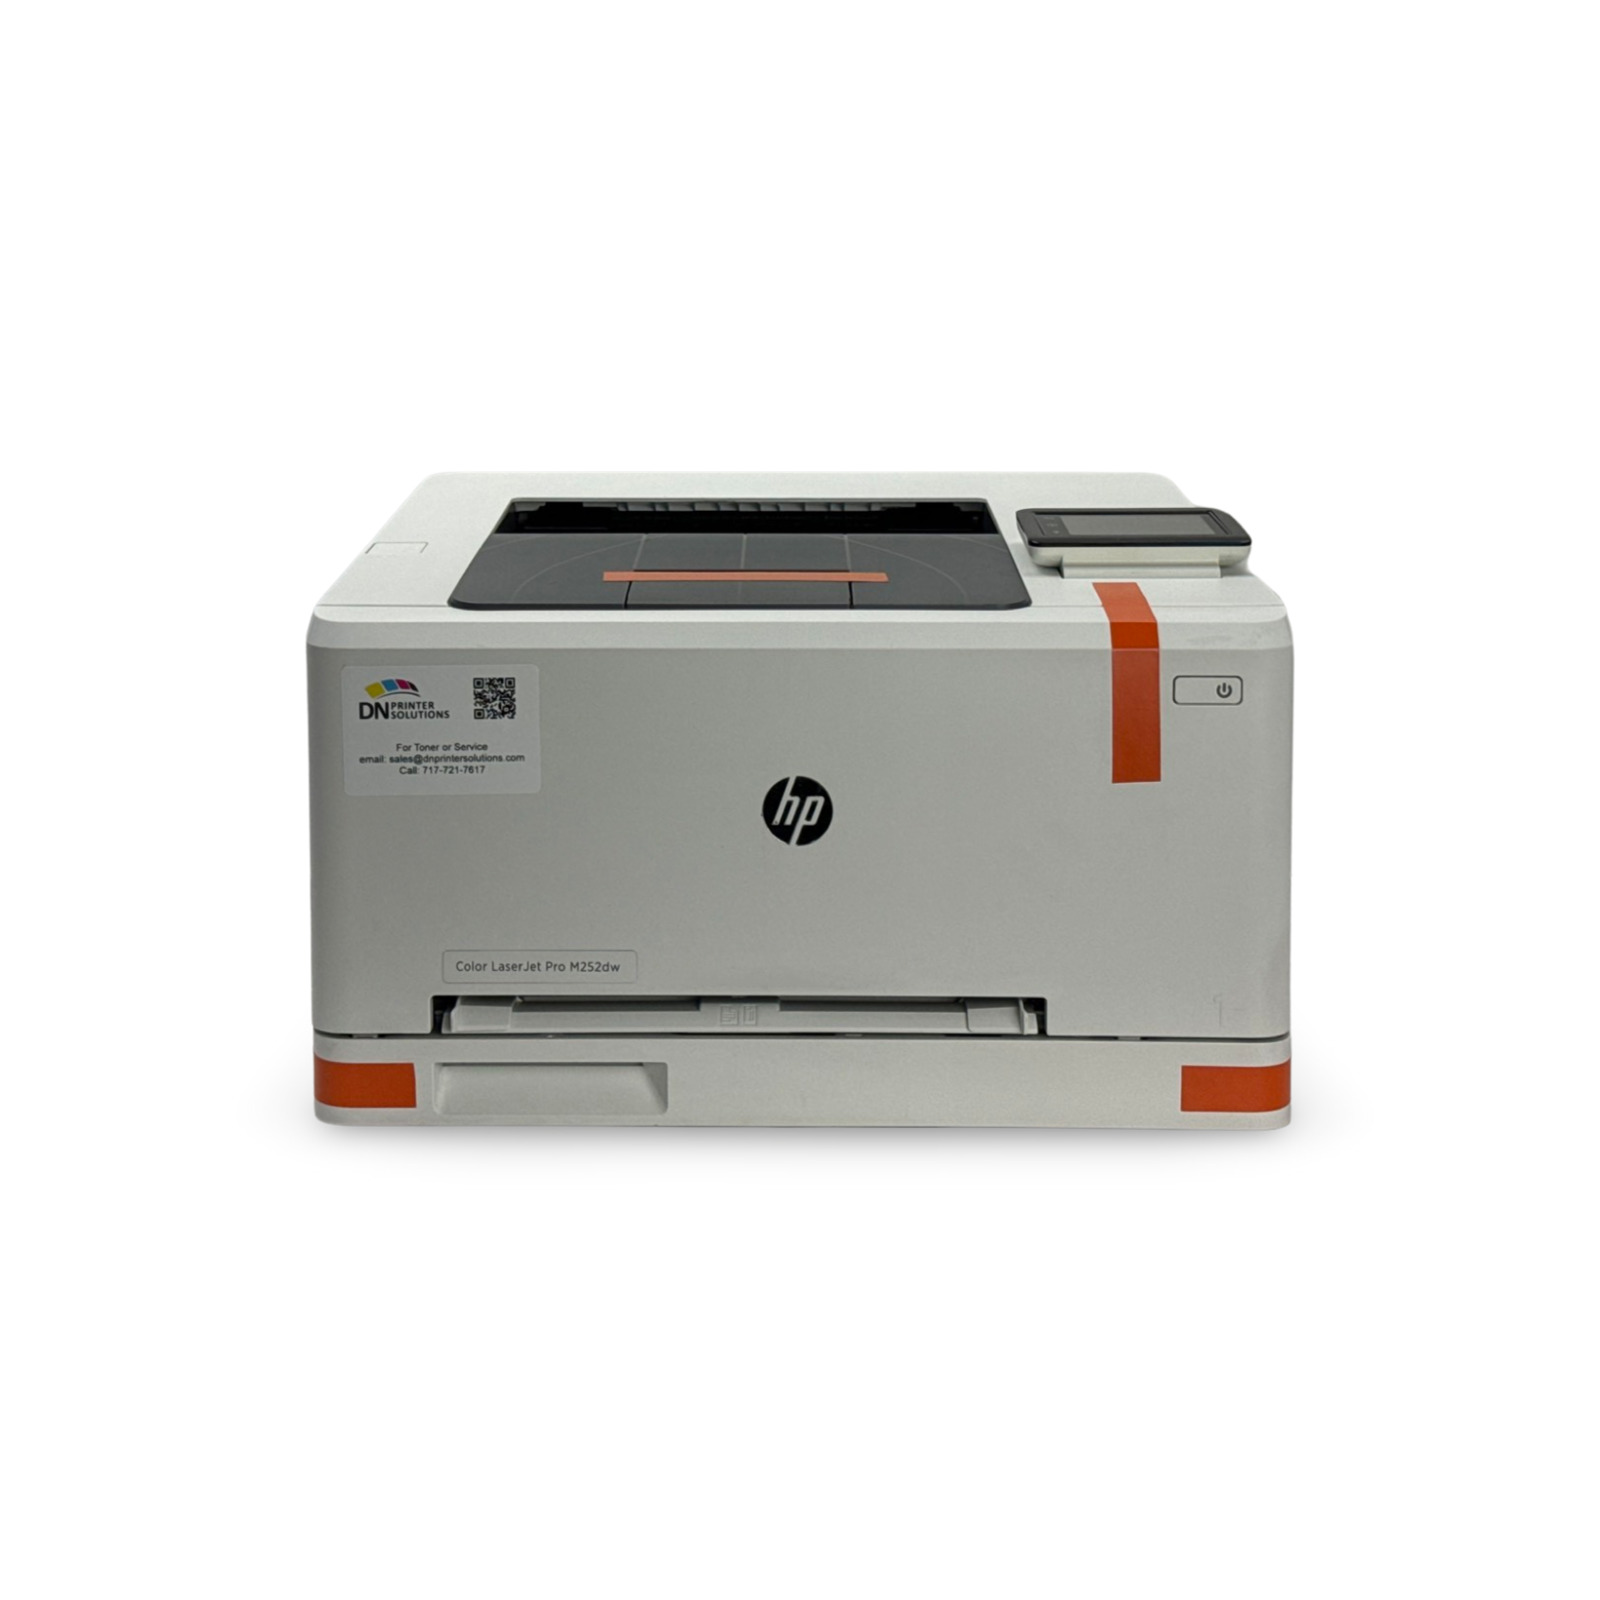 HP LaserJet Pro M252dw B4A22A Color Printer  w/ NEW Toner